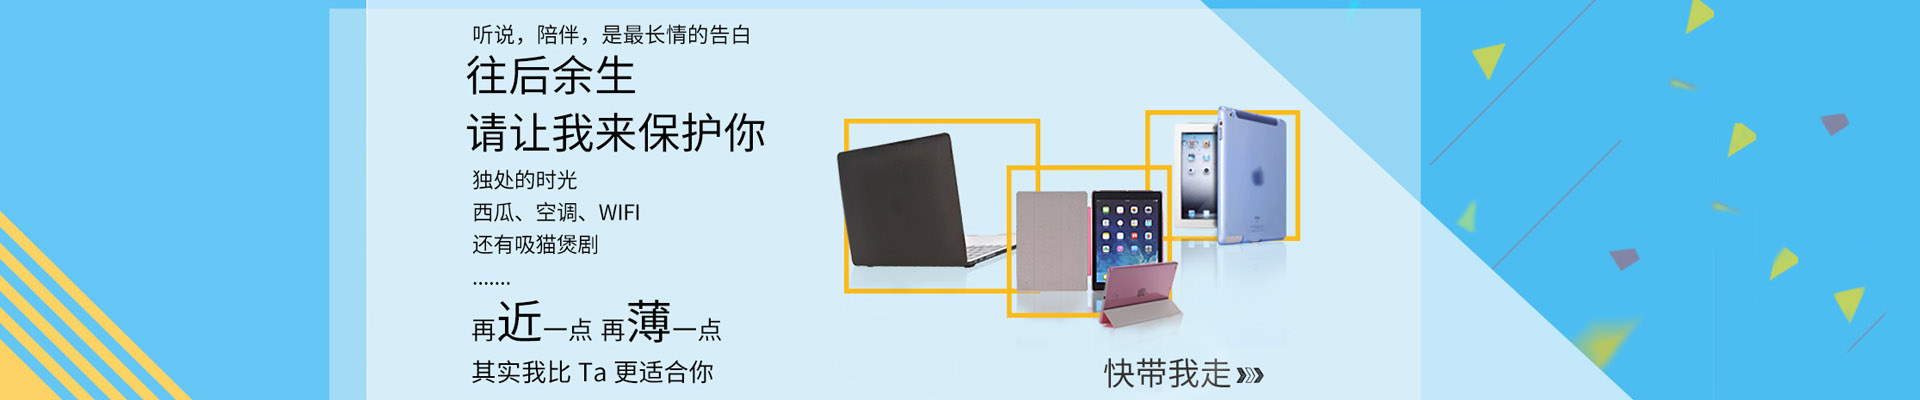 iPadAir2全包tpu保护壳-tpu款-东莞市成康电子有限公司